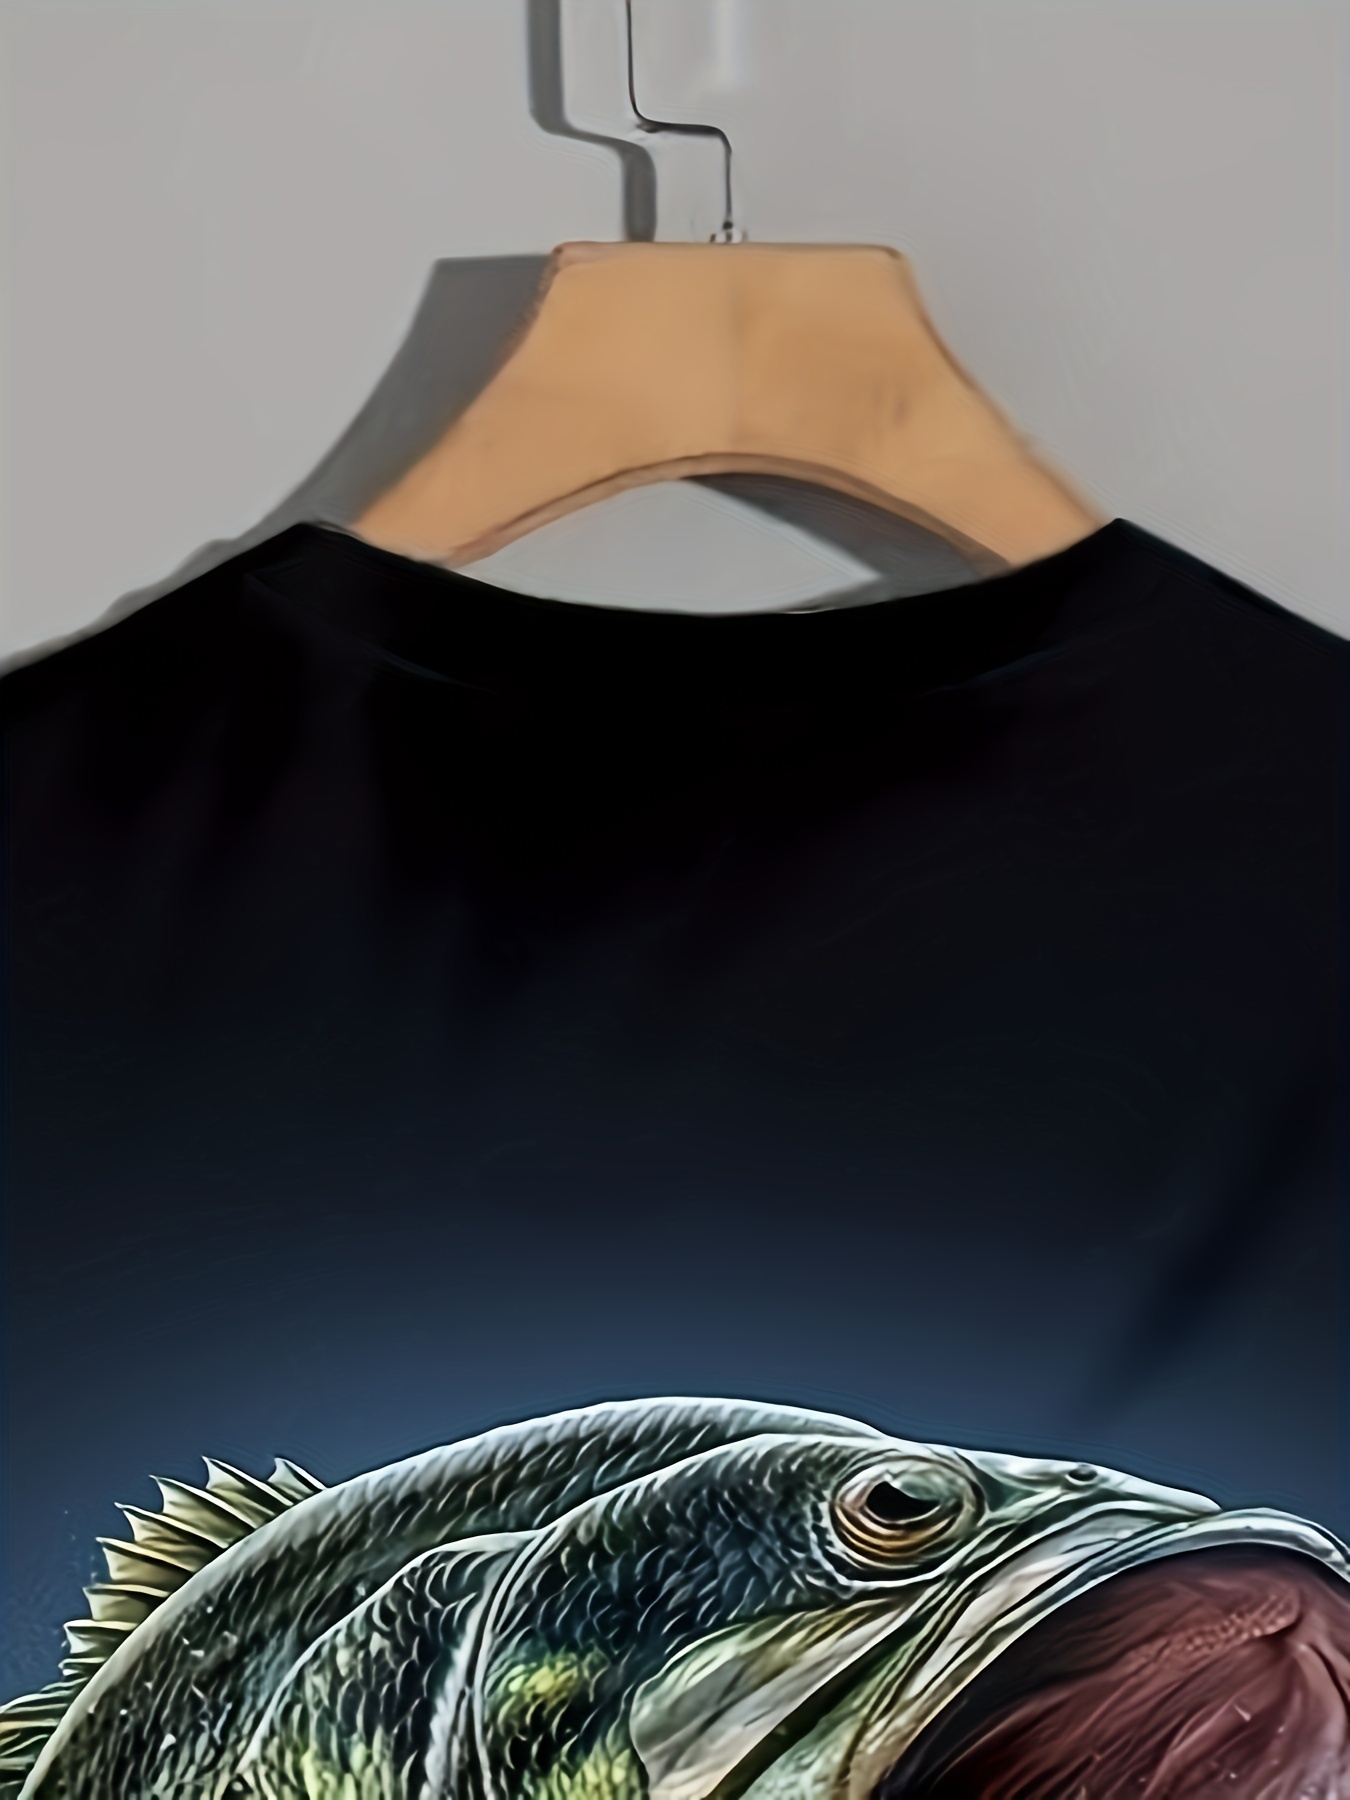 Men's Fishing T shirt 3d Digital Print Active Stretch Short - Temu Canada